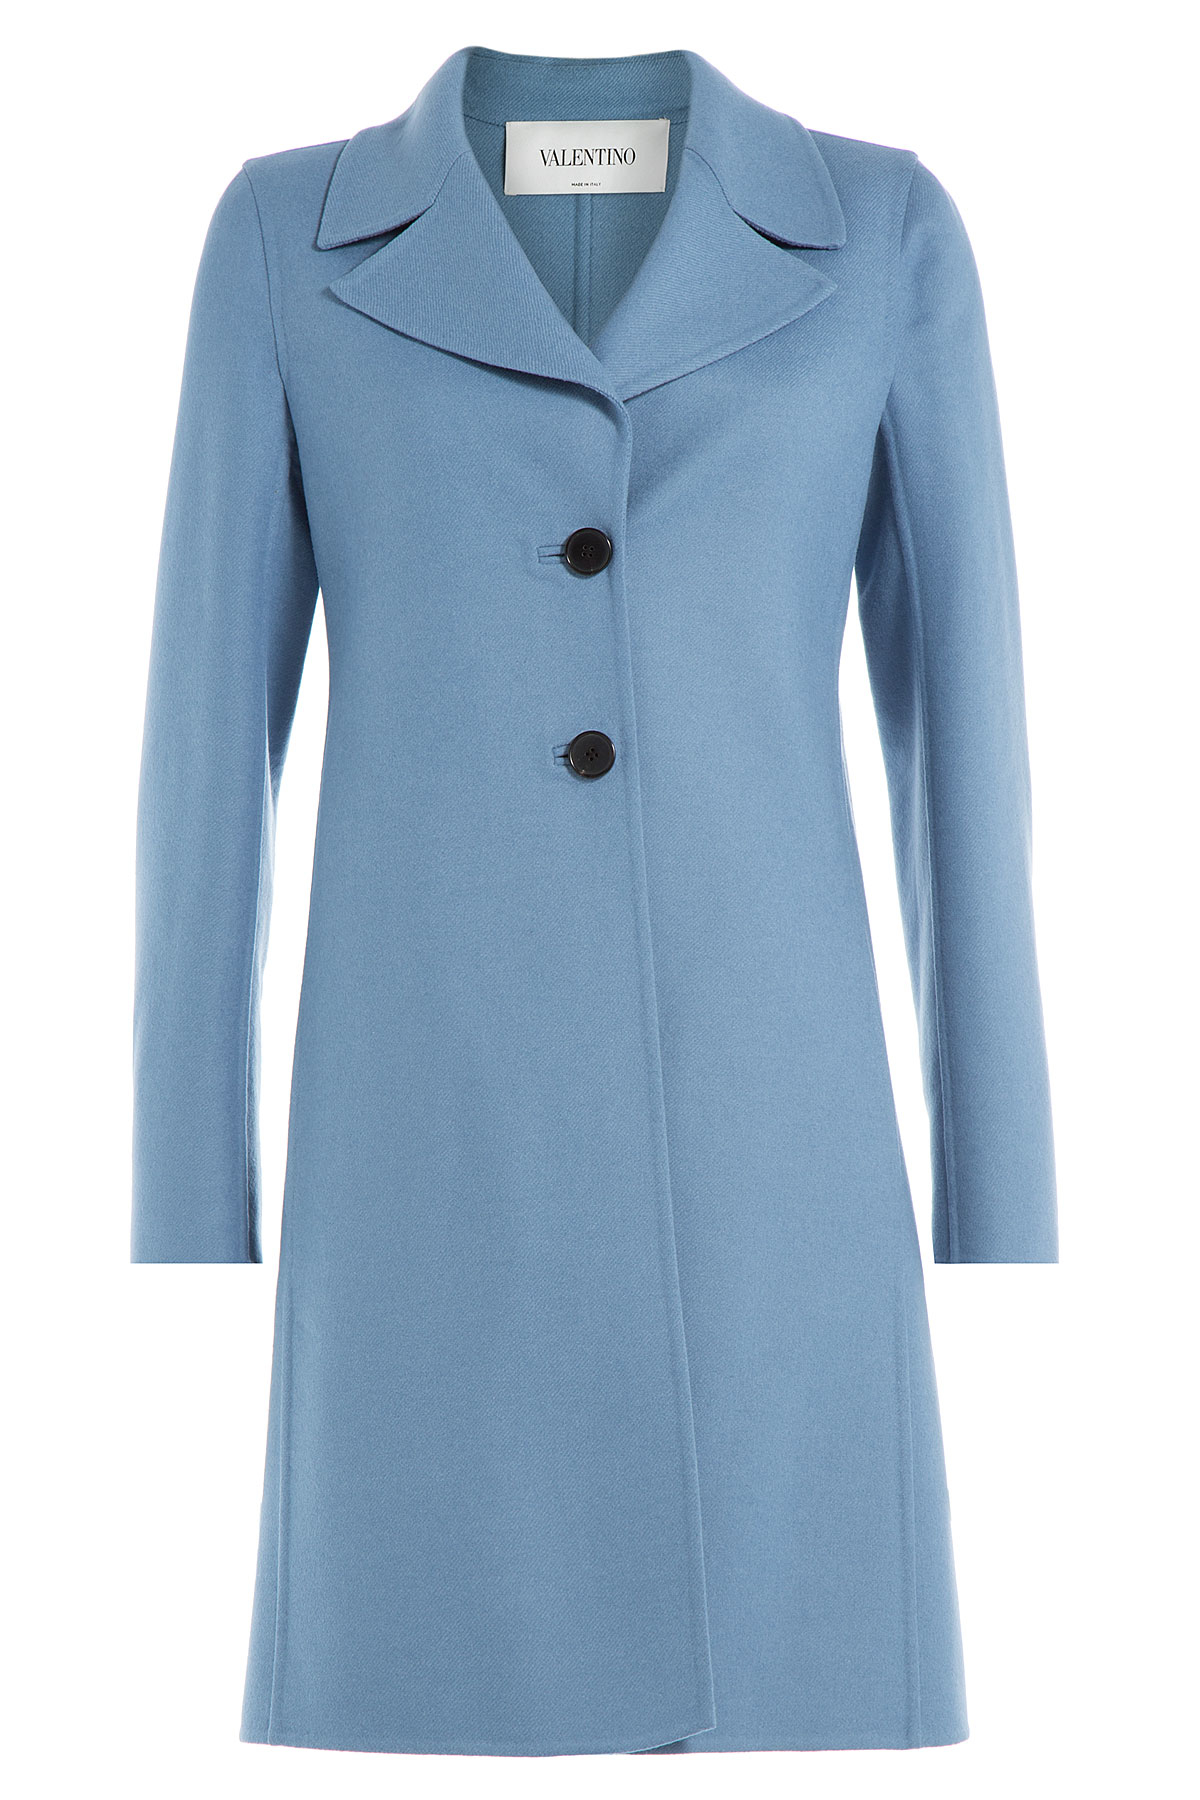 Lyst - Valentino Wool Coat - Blue in Blue